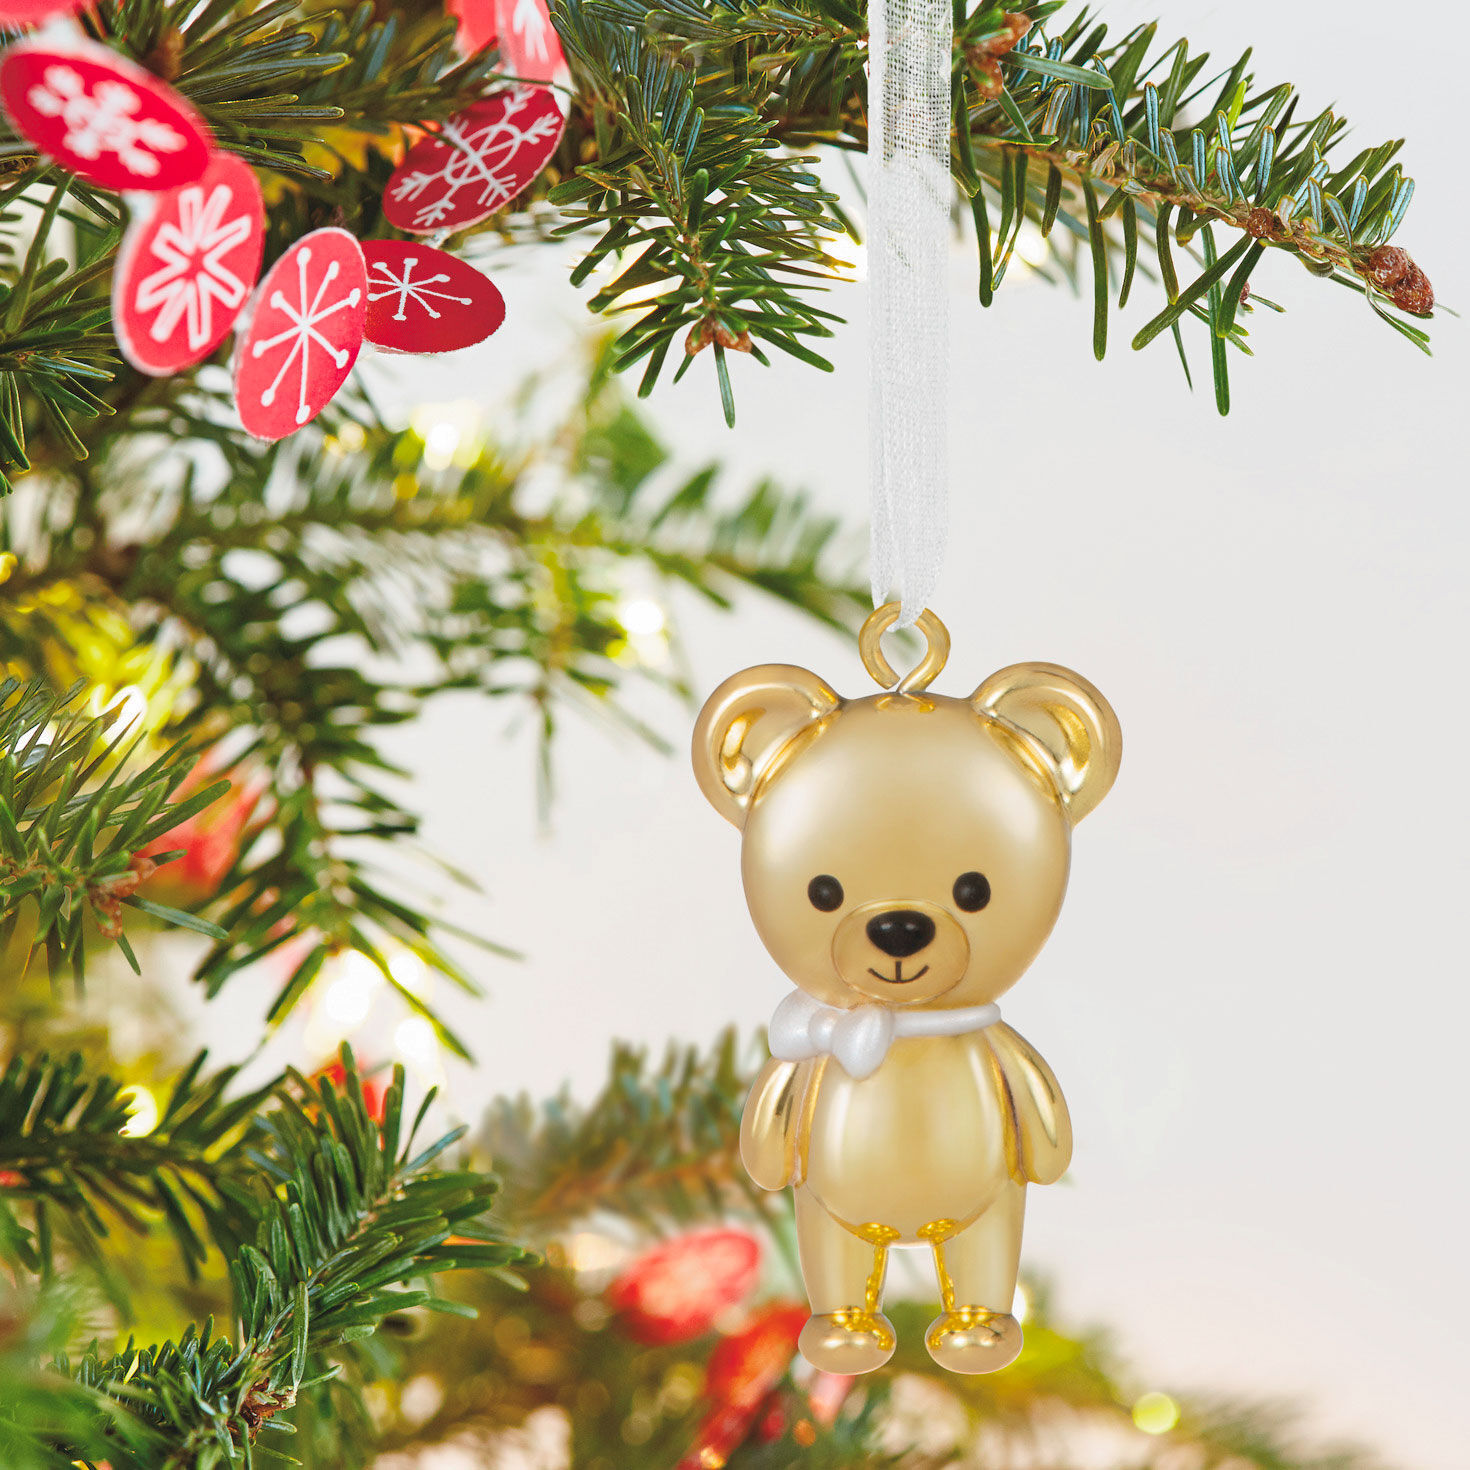 Mom To Be Baby Shower Christmas Tree Hallmark Keepsake Ornament New In Box 